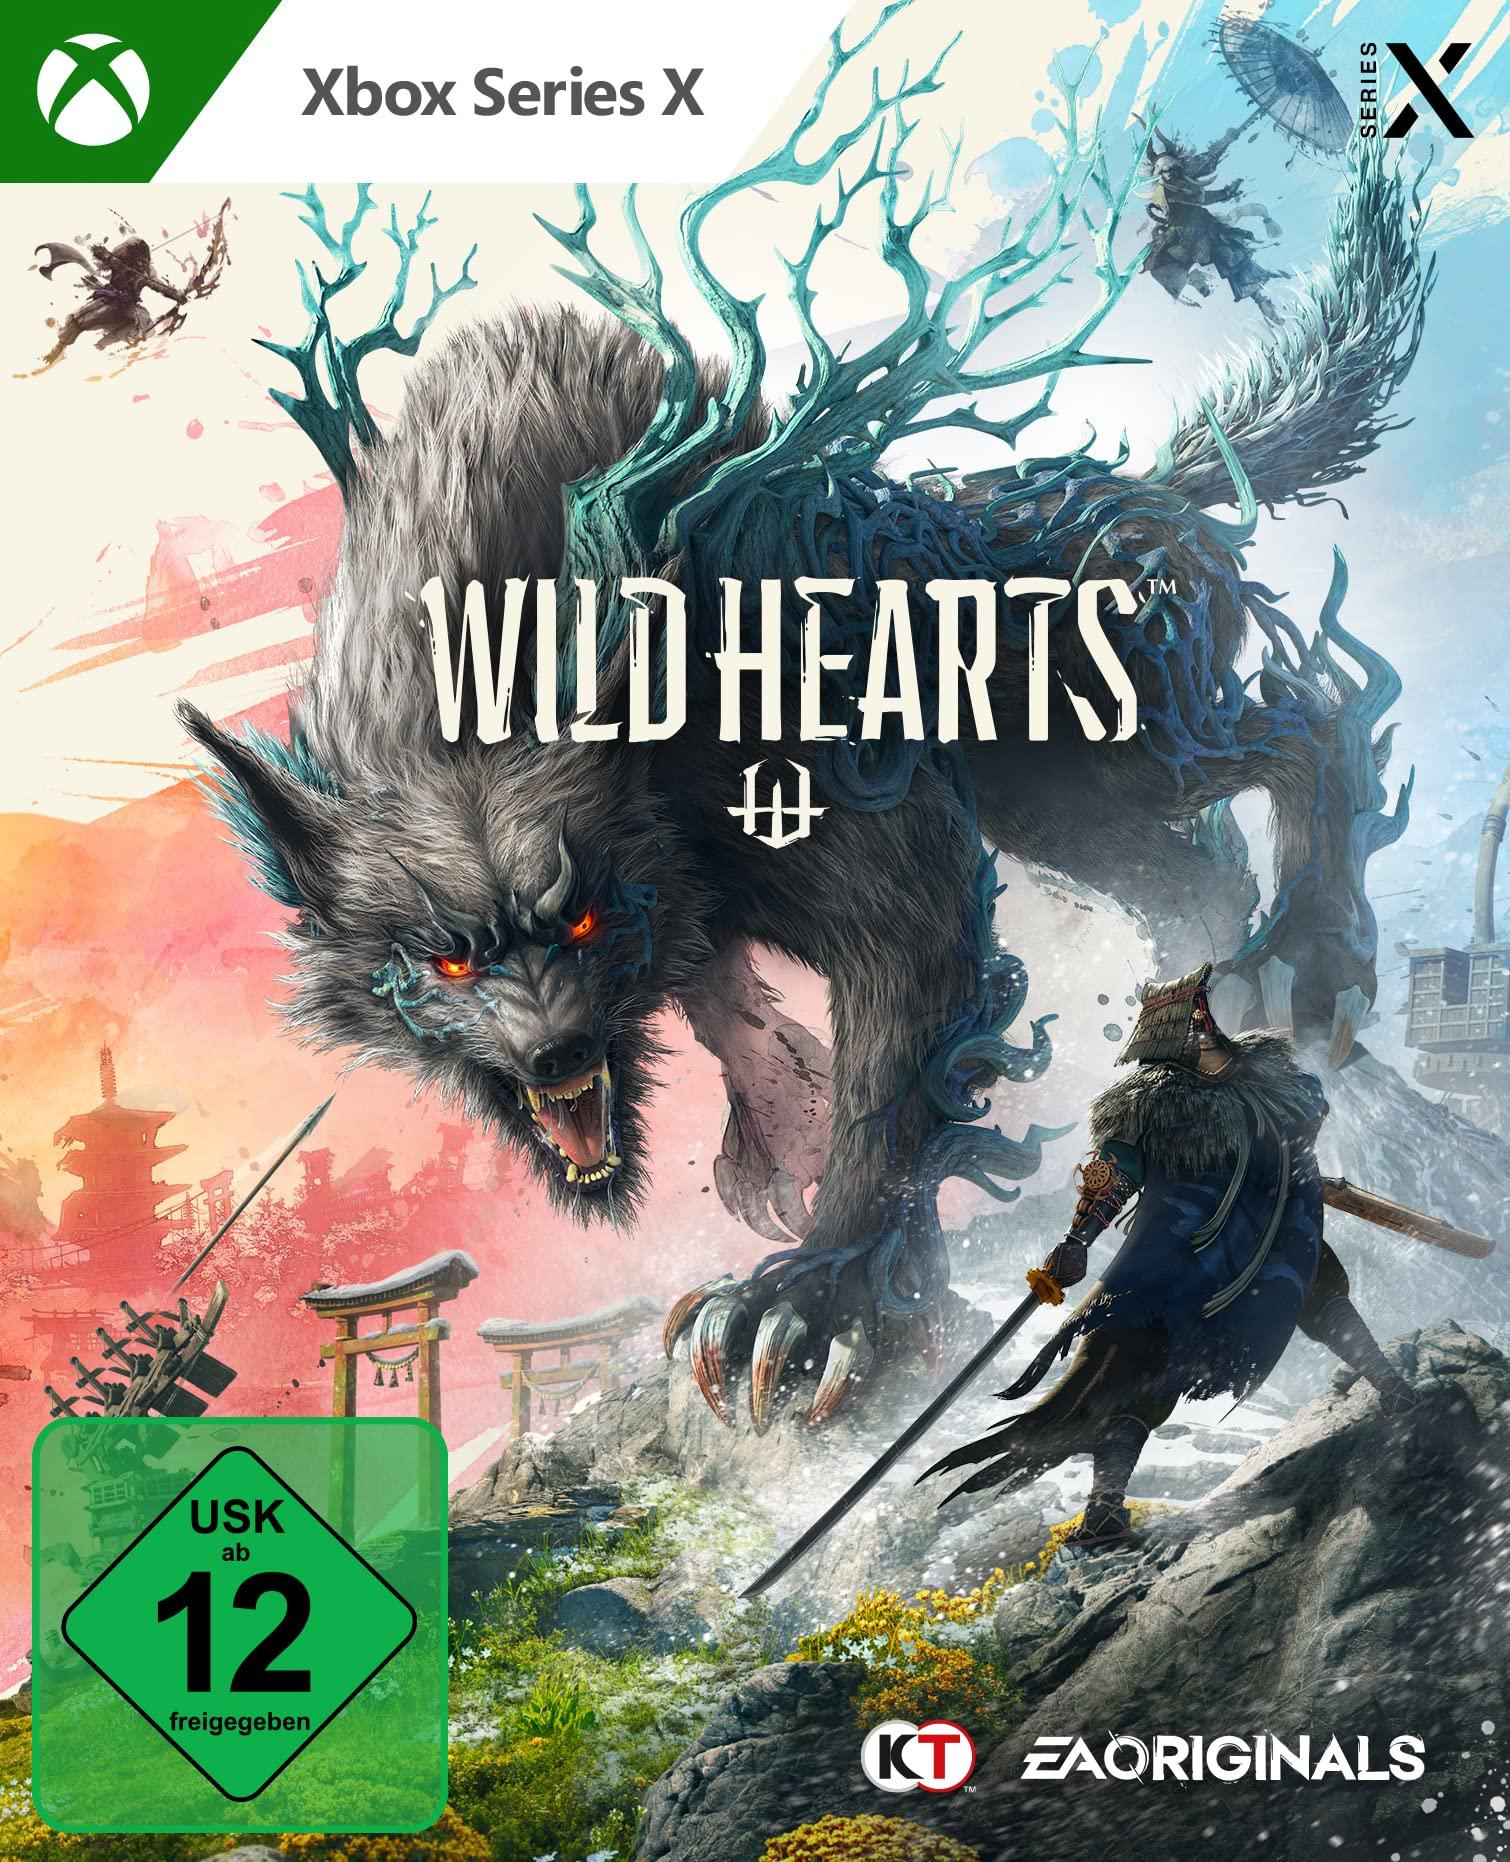 Series X] [Xbox - Wild Hearts